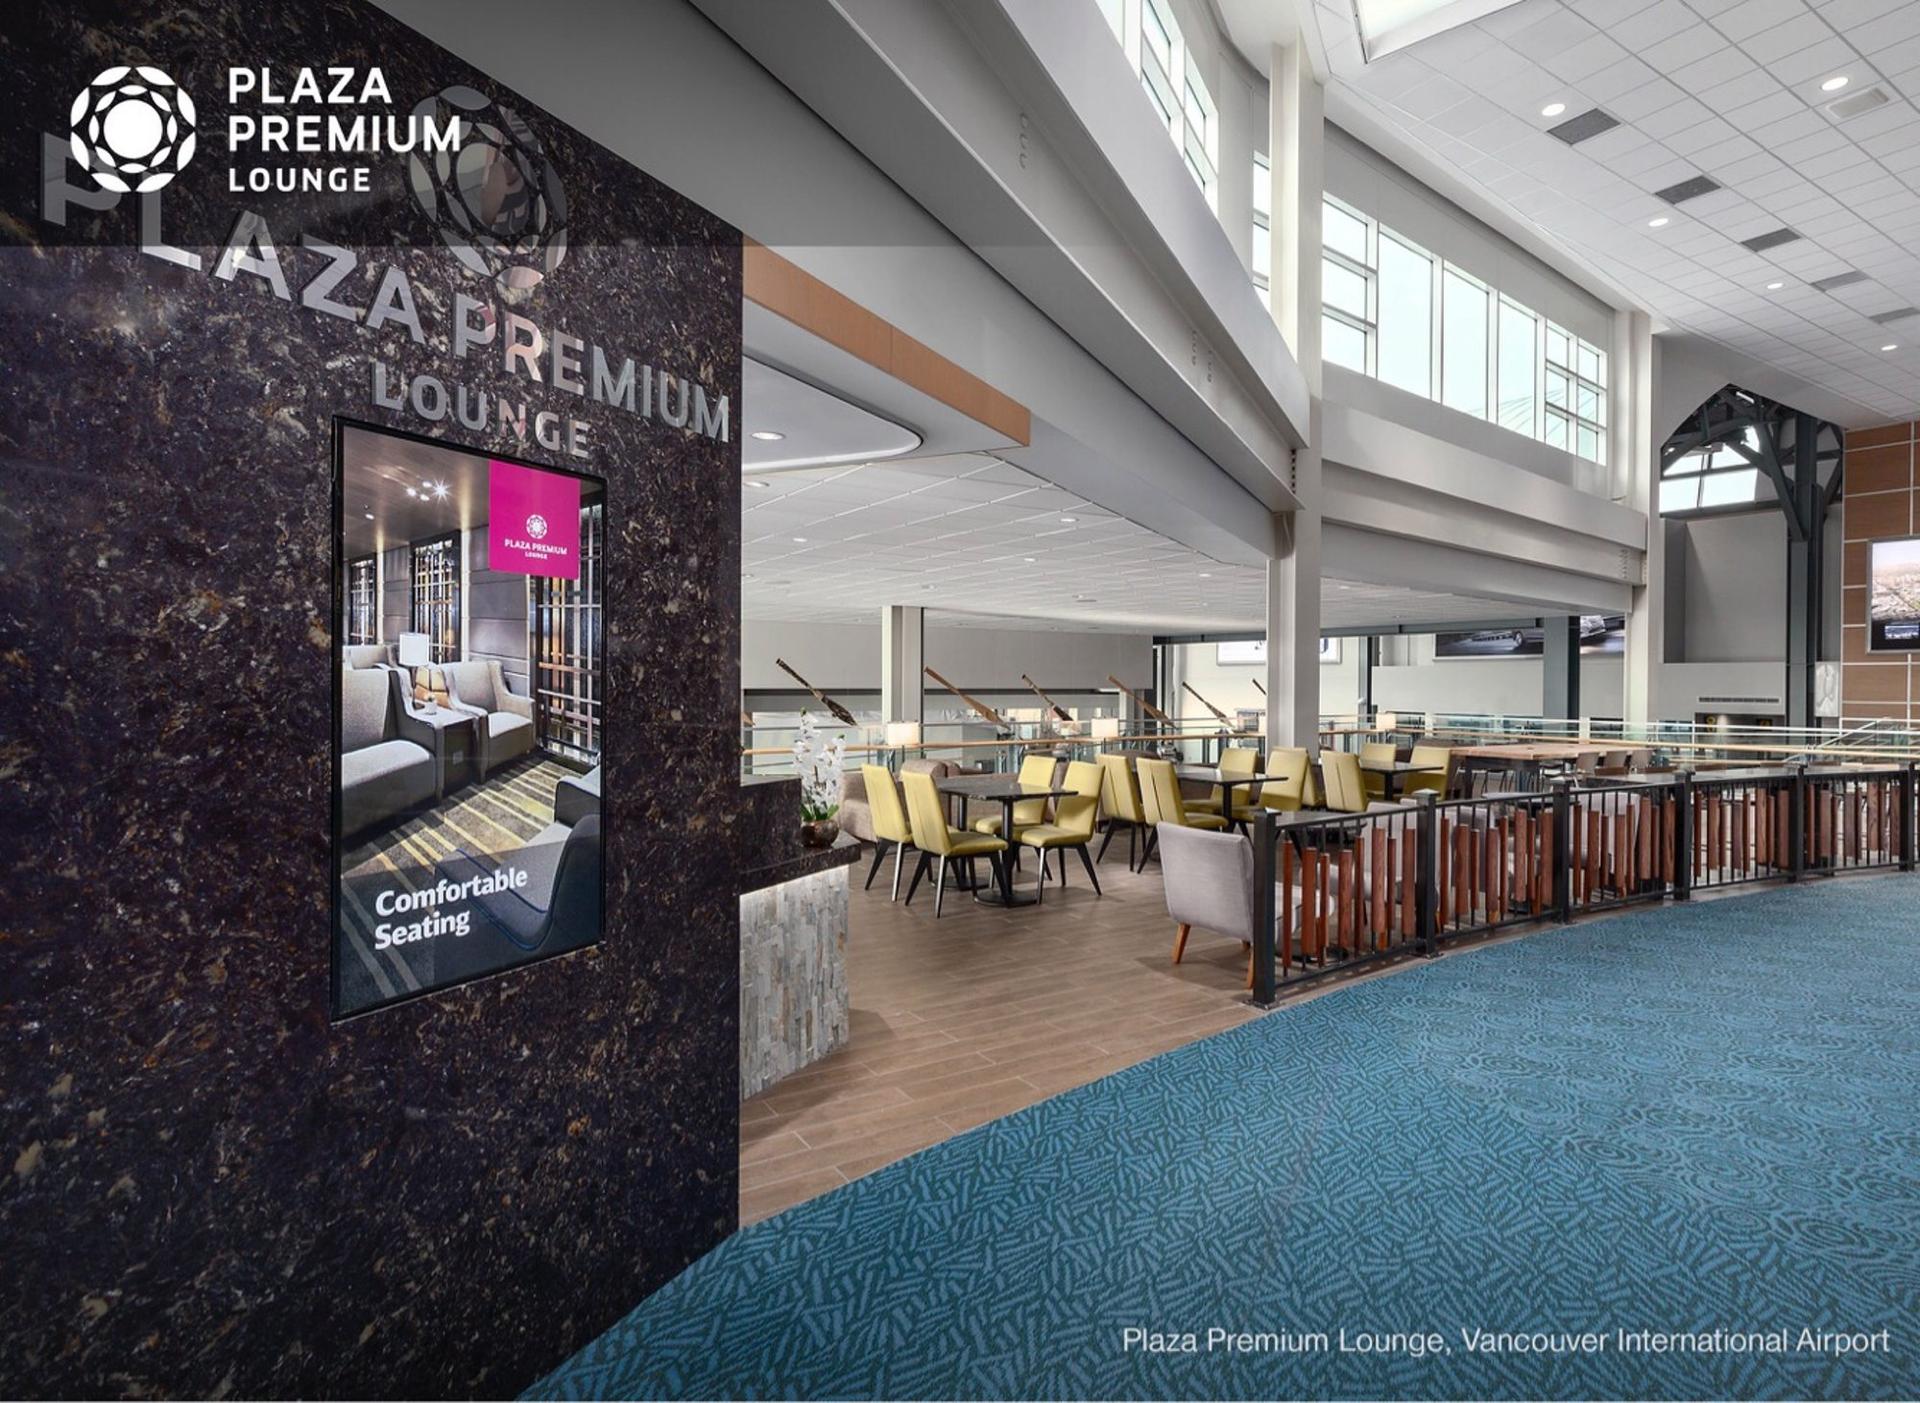 Plaza Premium Lounge (Domestic Gate C29) image 11 of 17